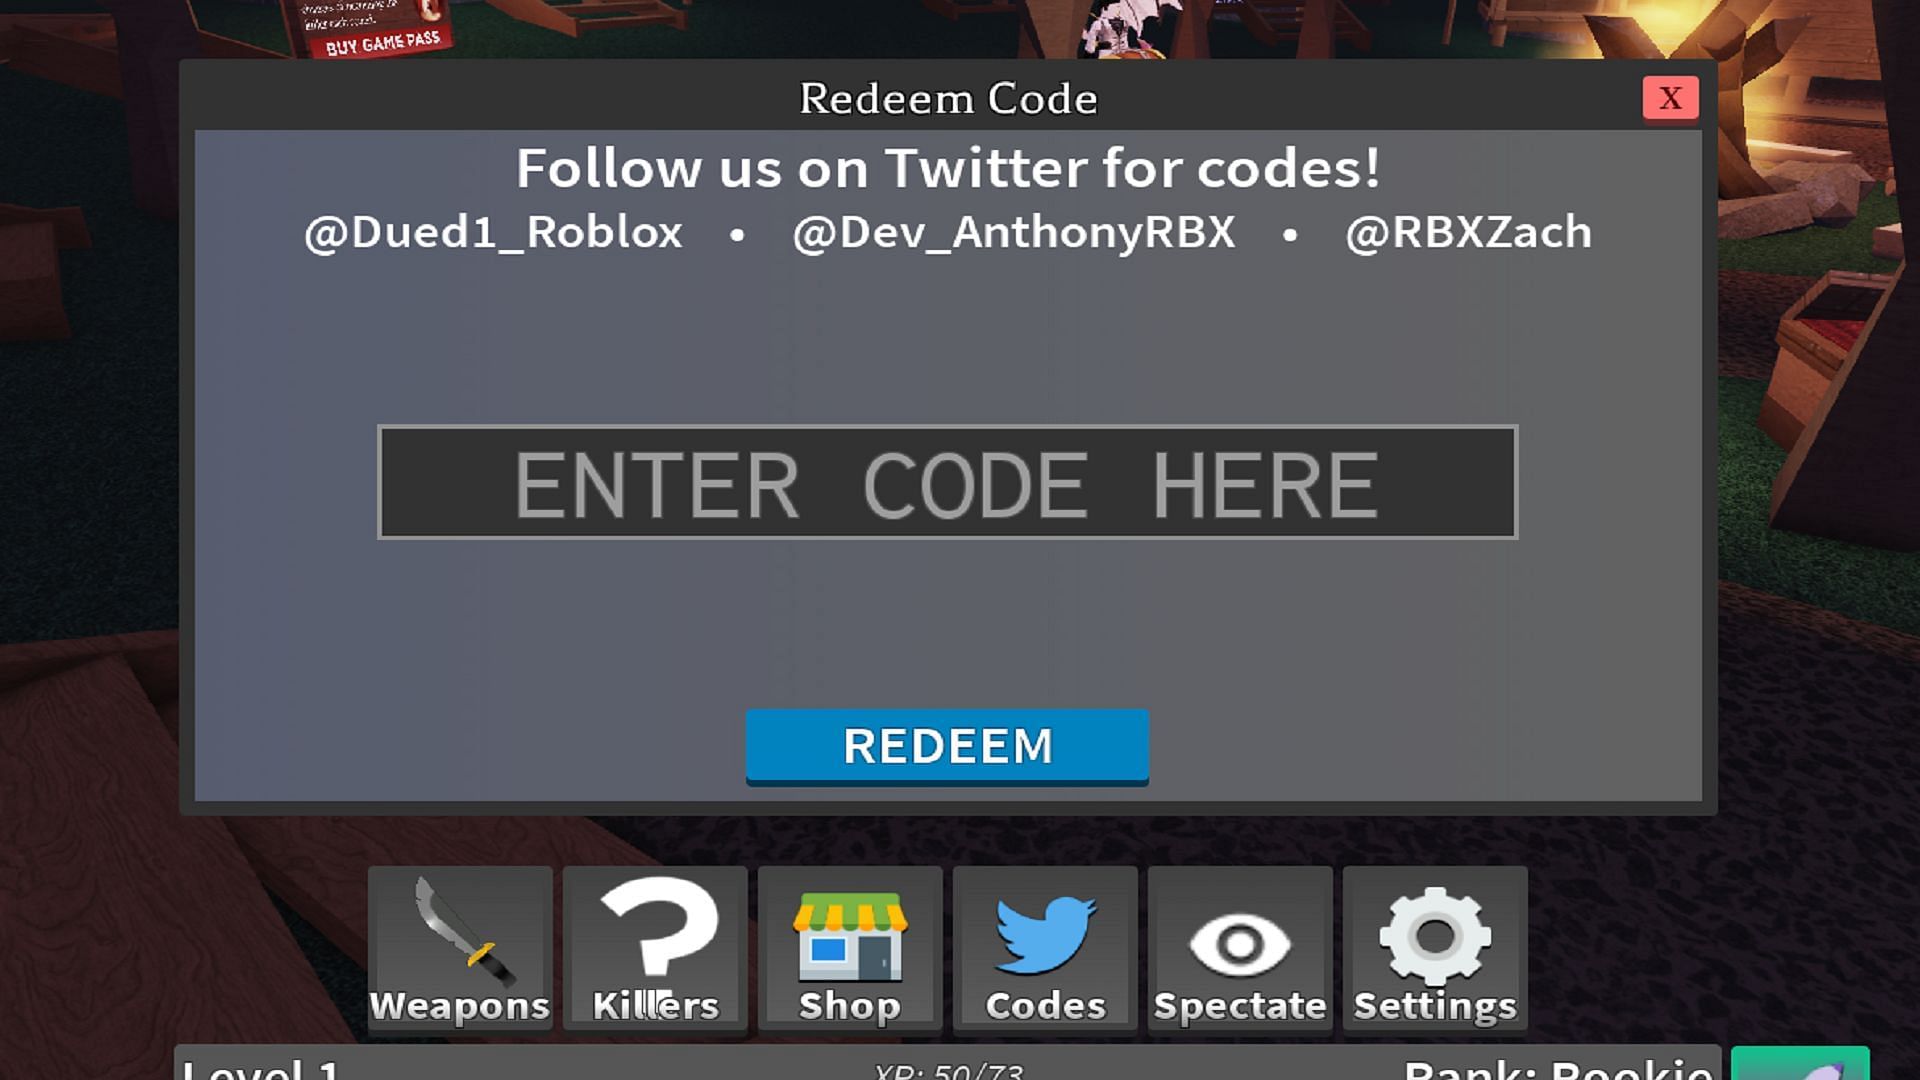 Roblox Survive the Killer Codes (September 2021)